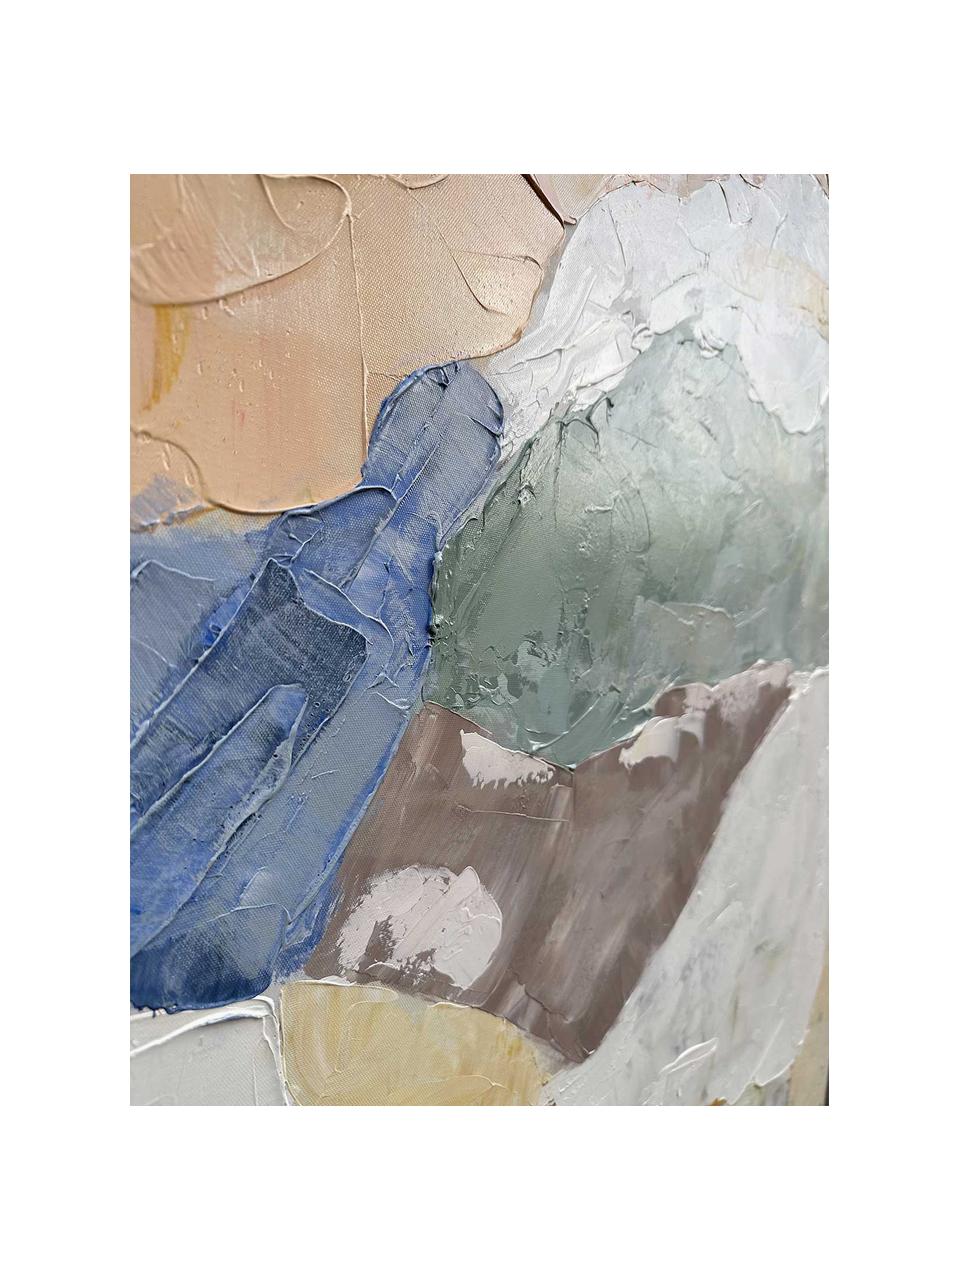 Toile peinte à la main Nubi Pastello, Multicolore, larg. 150 x haut. 120 cm